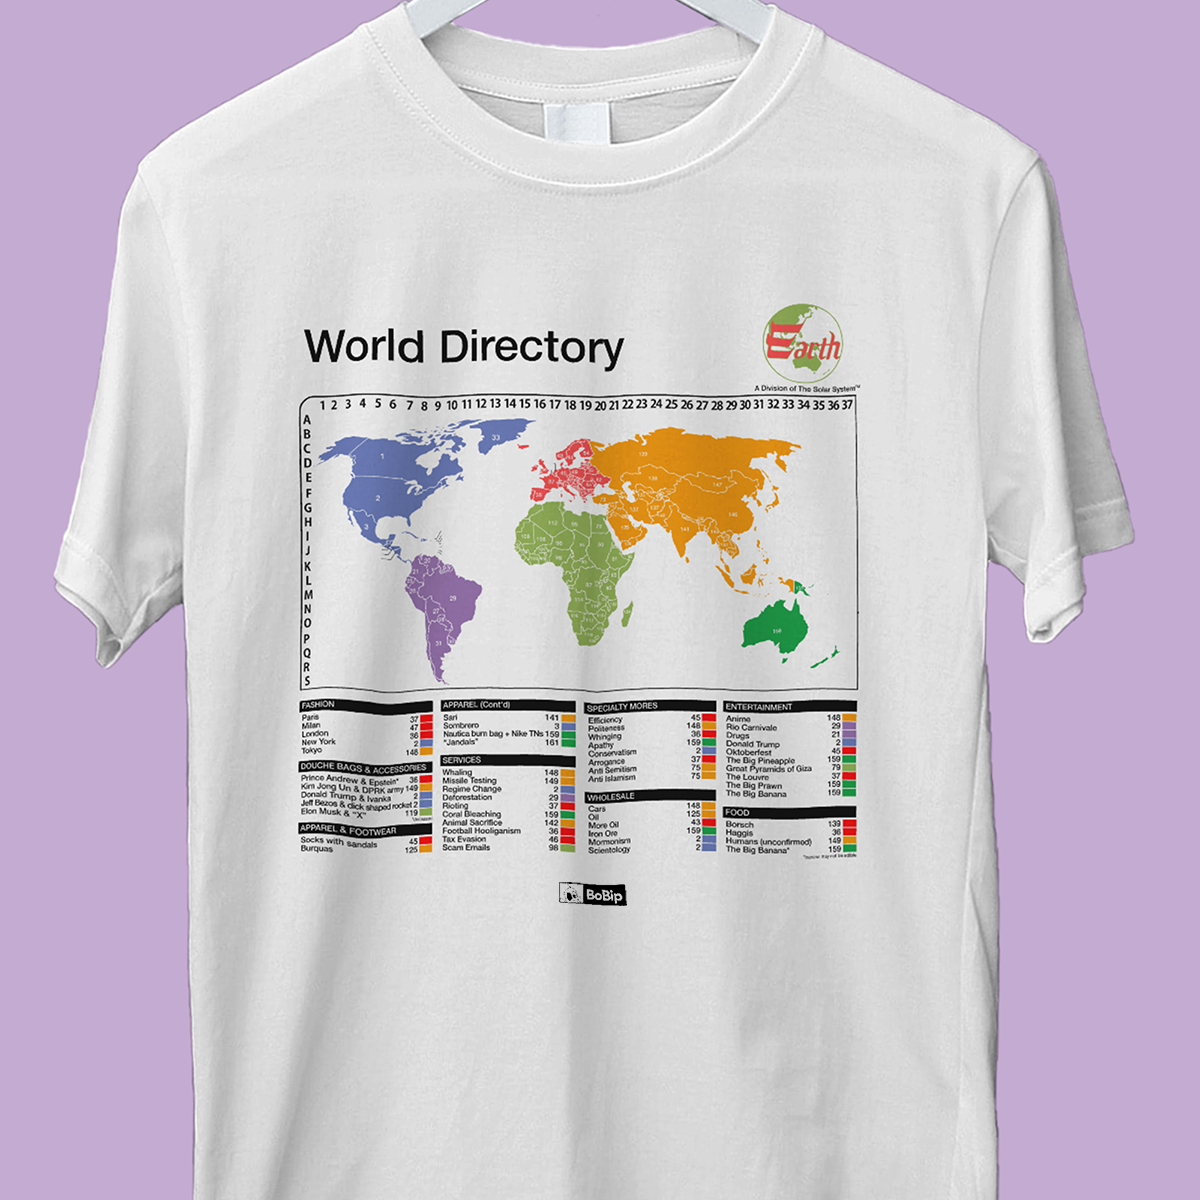 World Directory - Unisex T-shirt